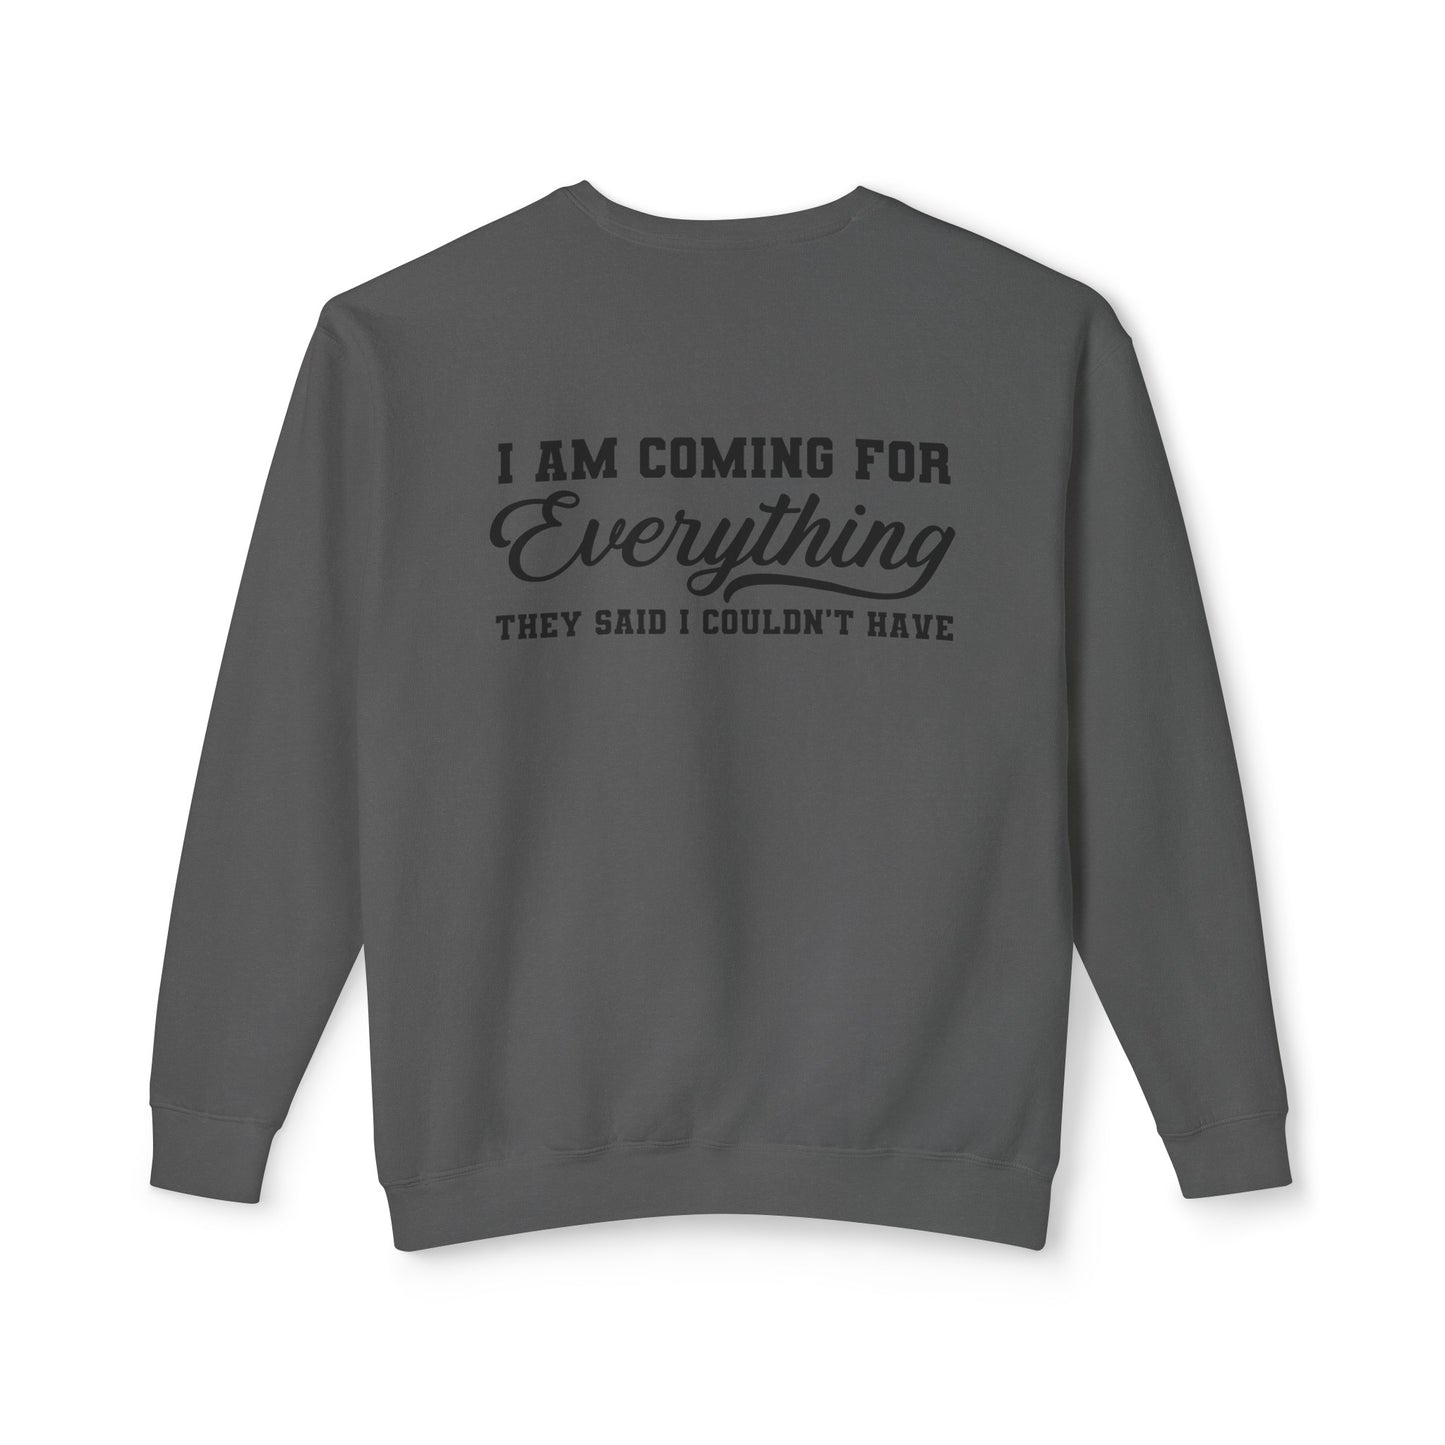 I'm Coming for Everything Crewneck Sweatshirt